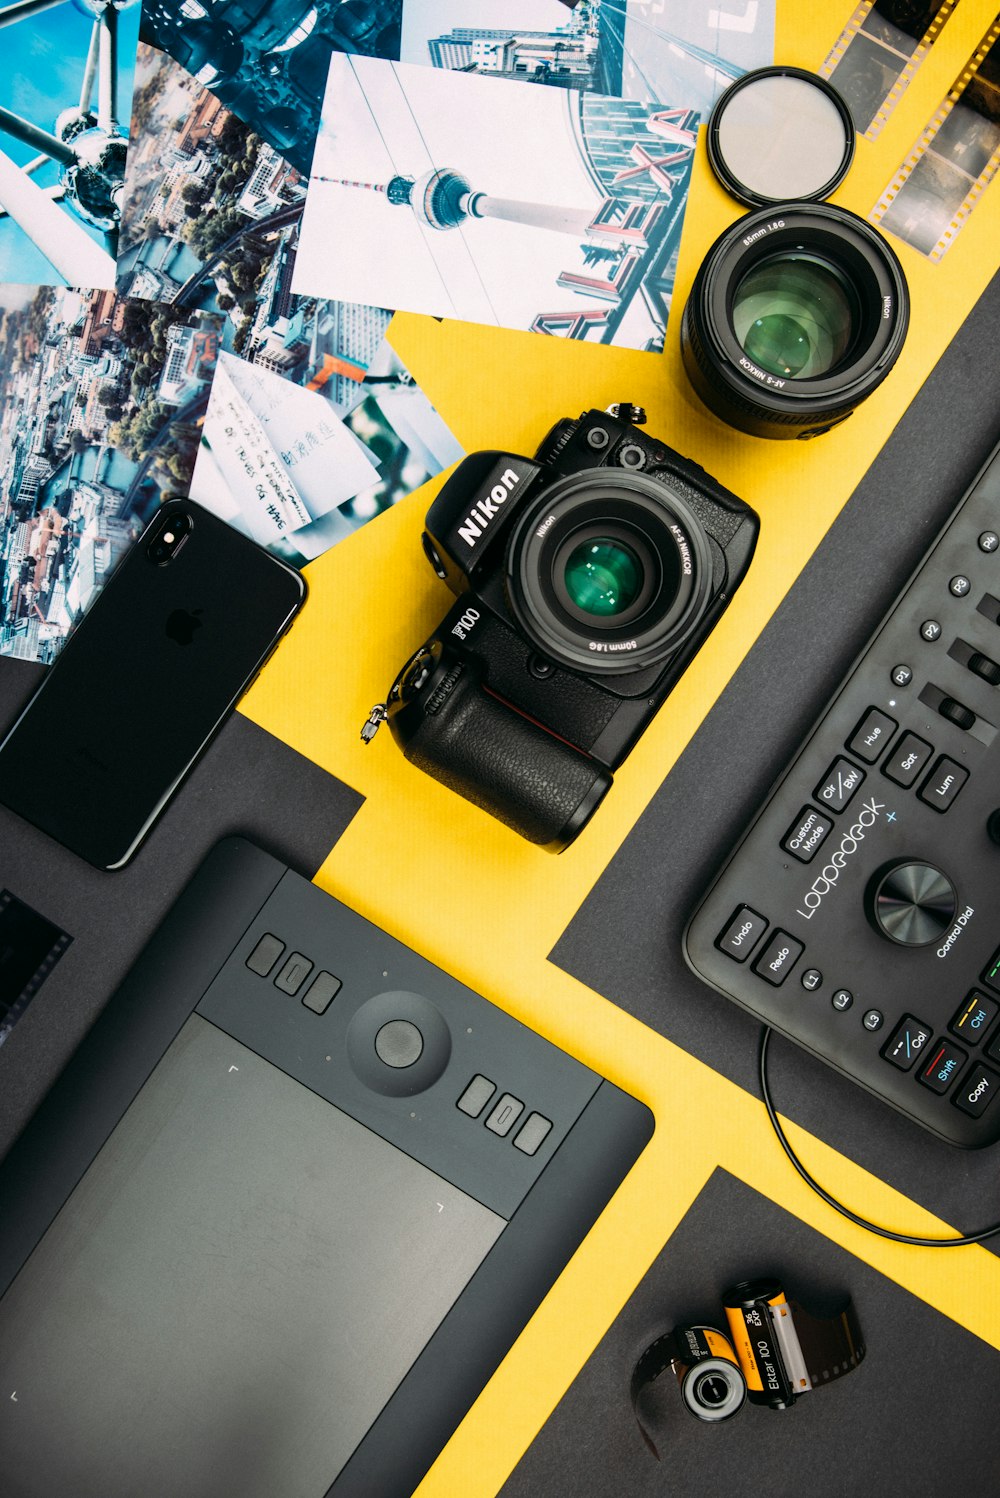 schwarze Nikon DSLR-Kamera neben dem weltraumgrauen iPhone X